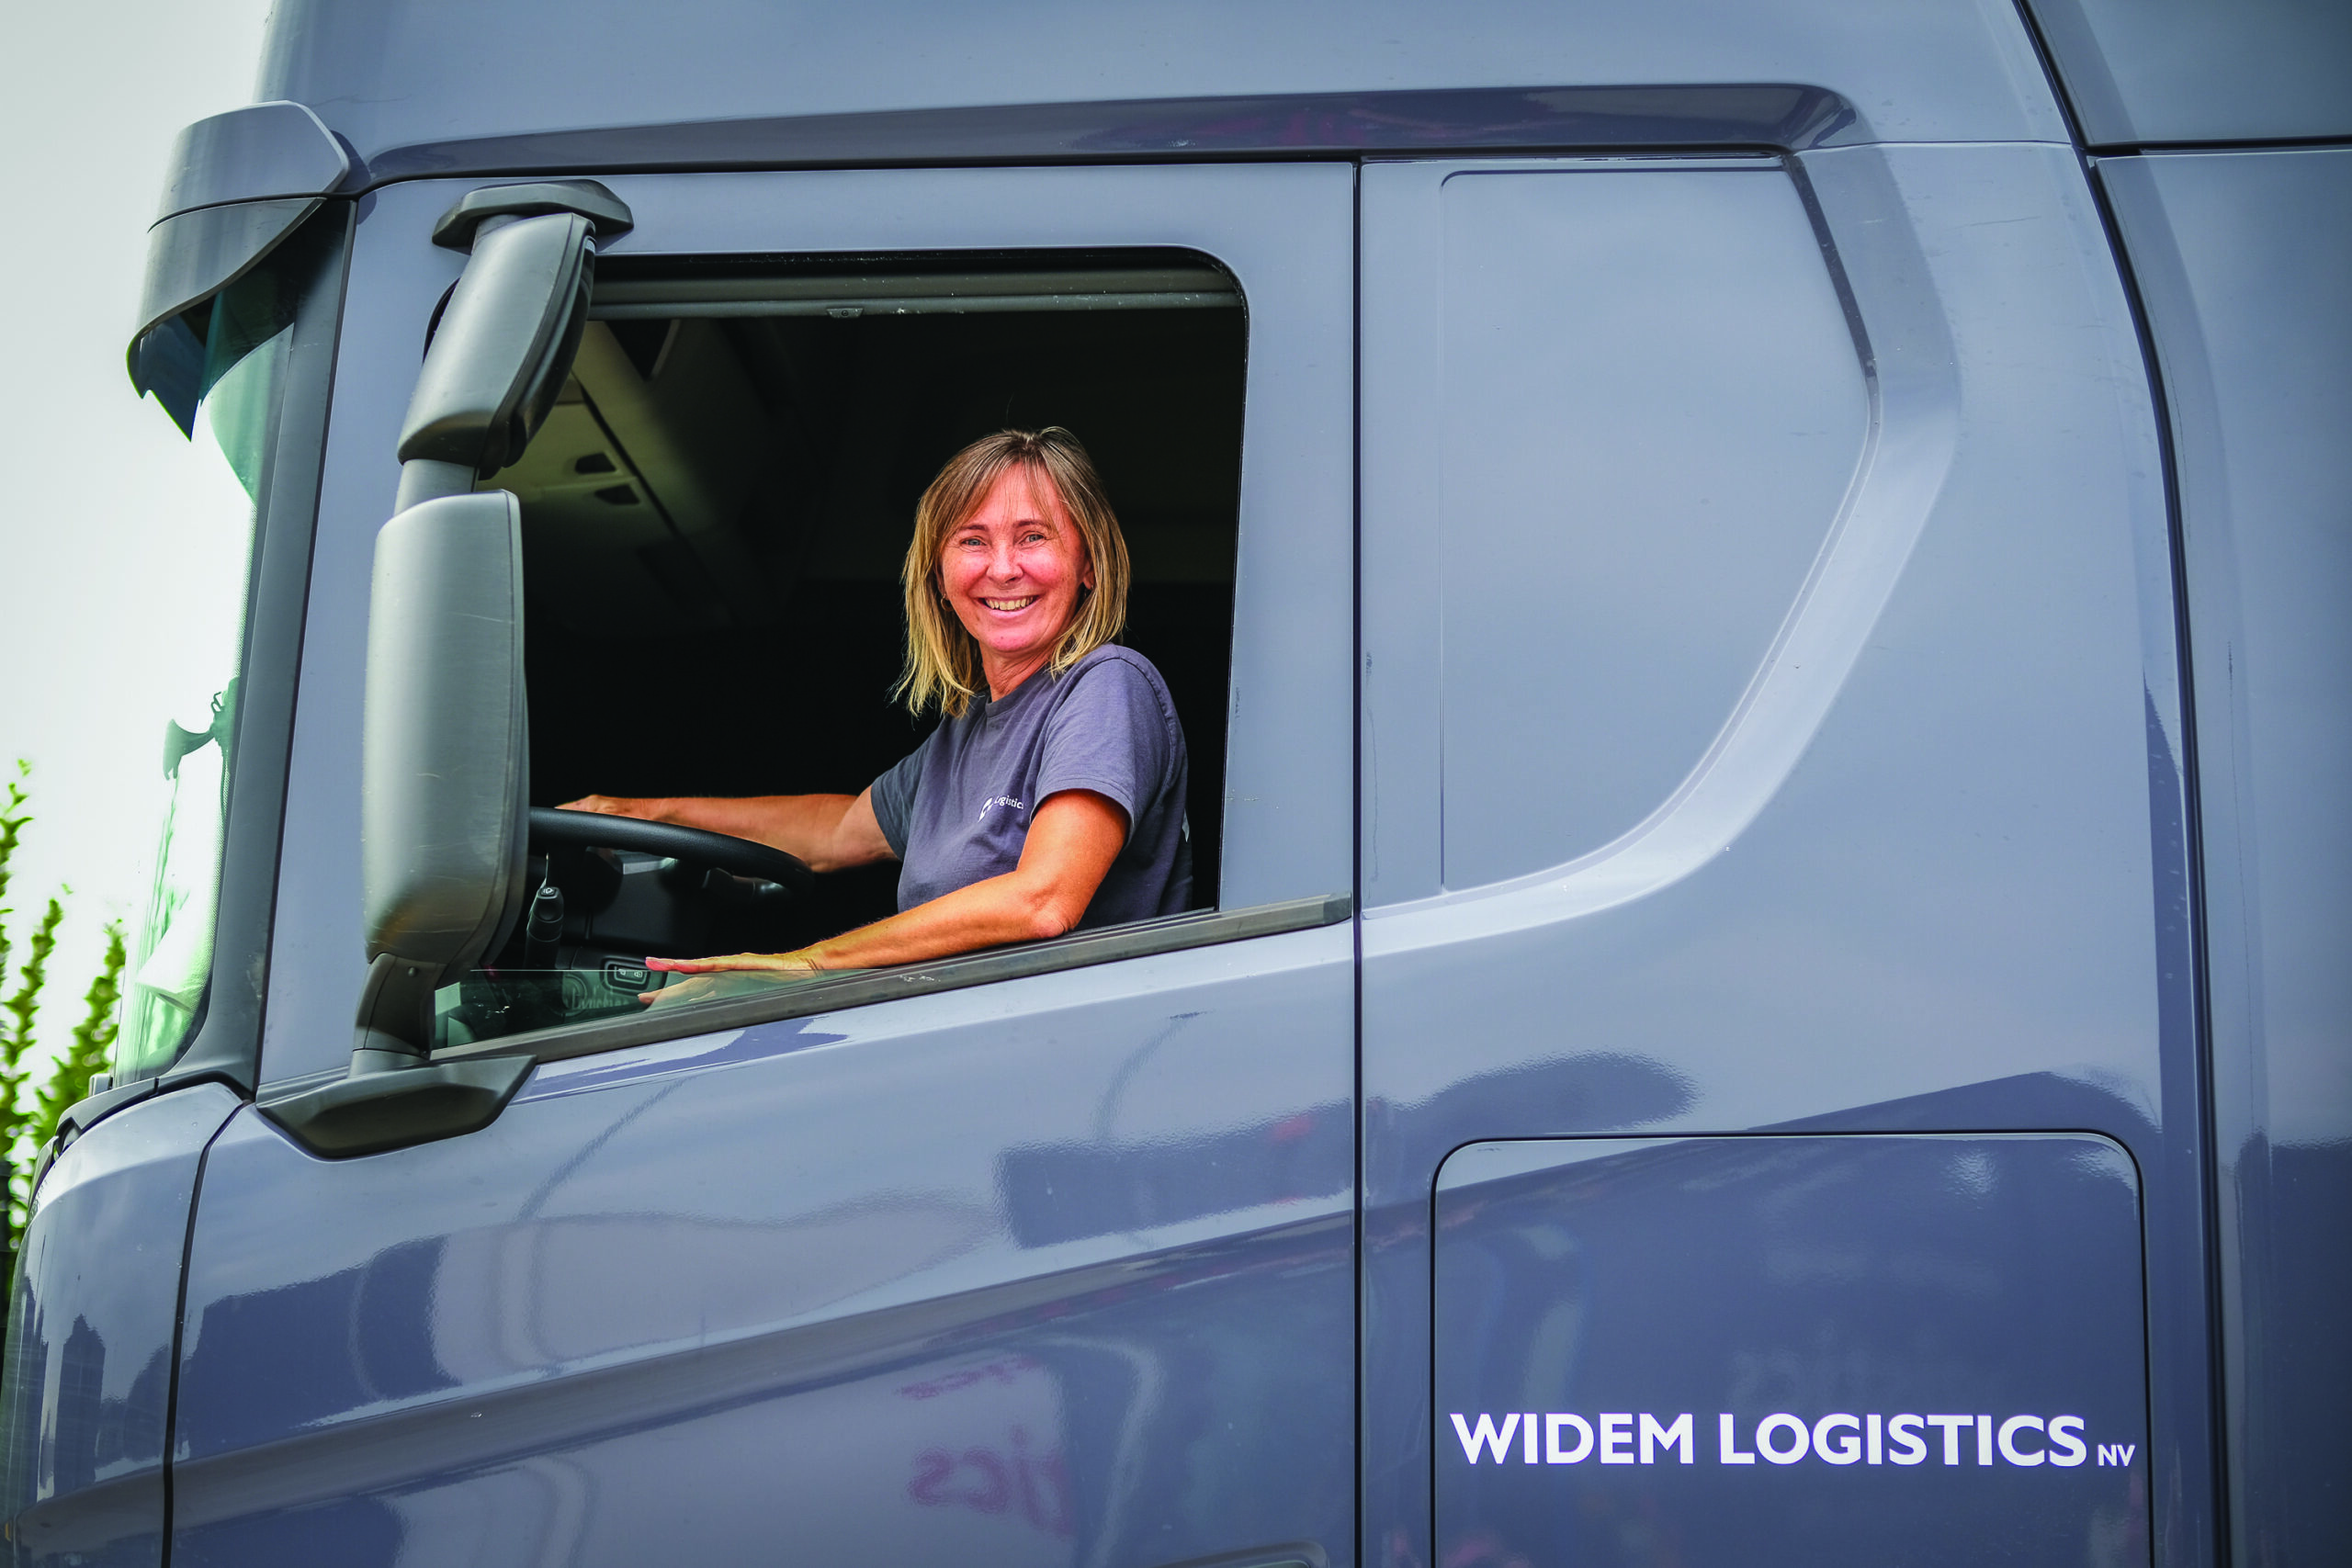 Employee of Widem Logistics in Truck